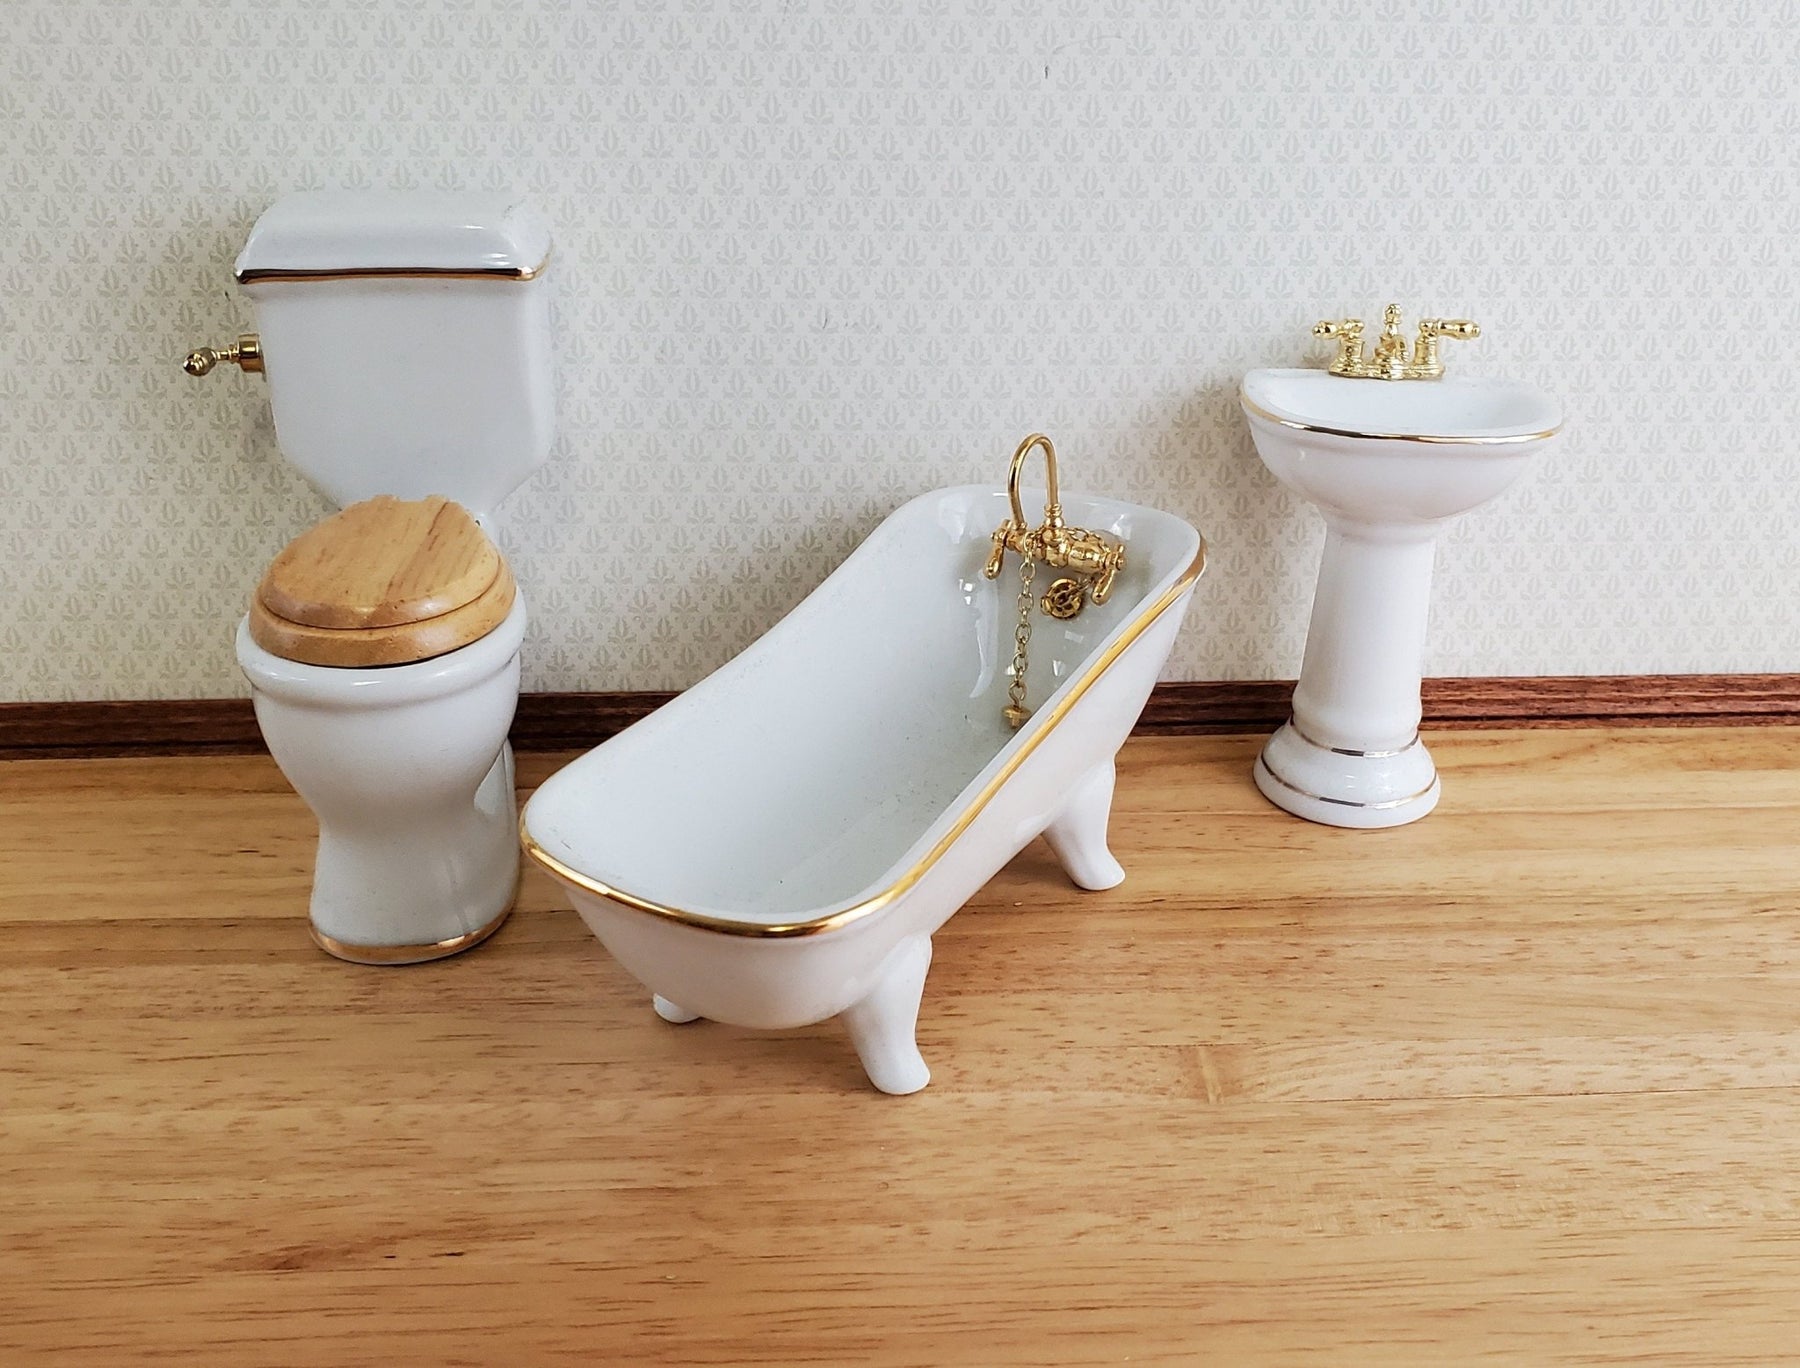 LHCER 1/24 Dollhouse Miniature Bathroom Set Simulation Ceramic